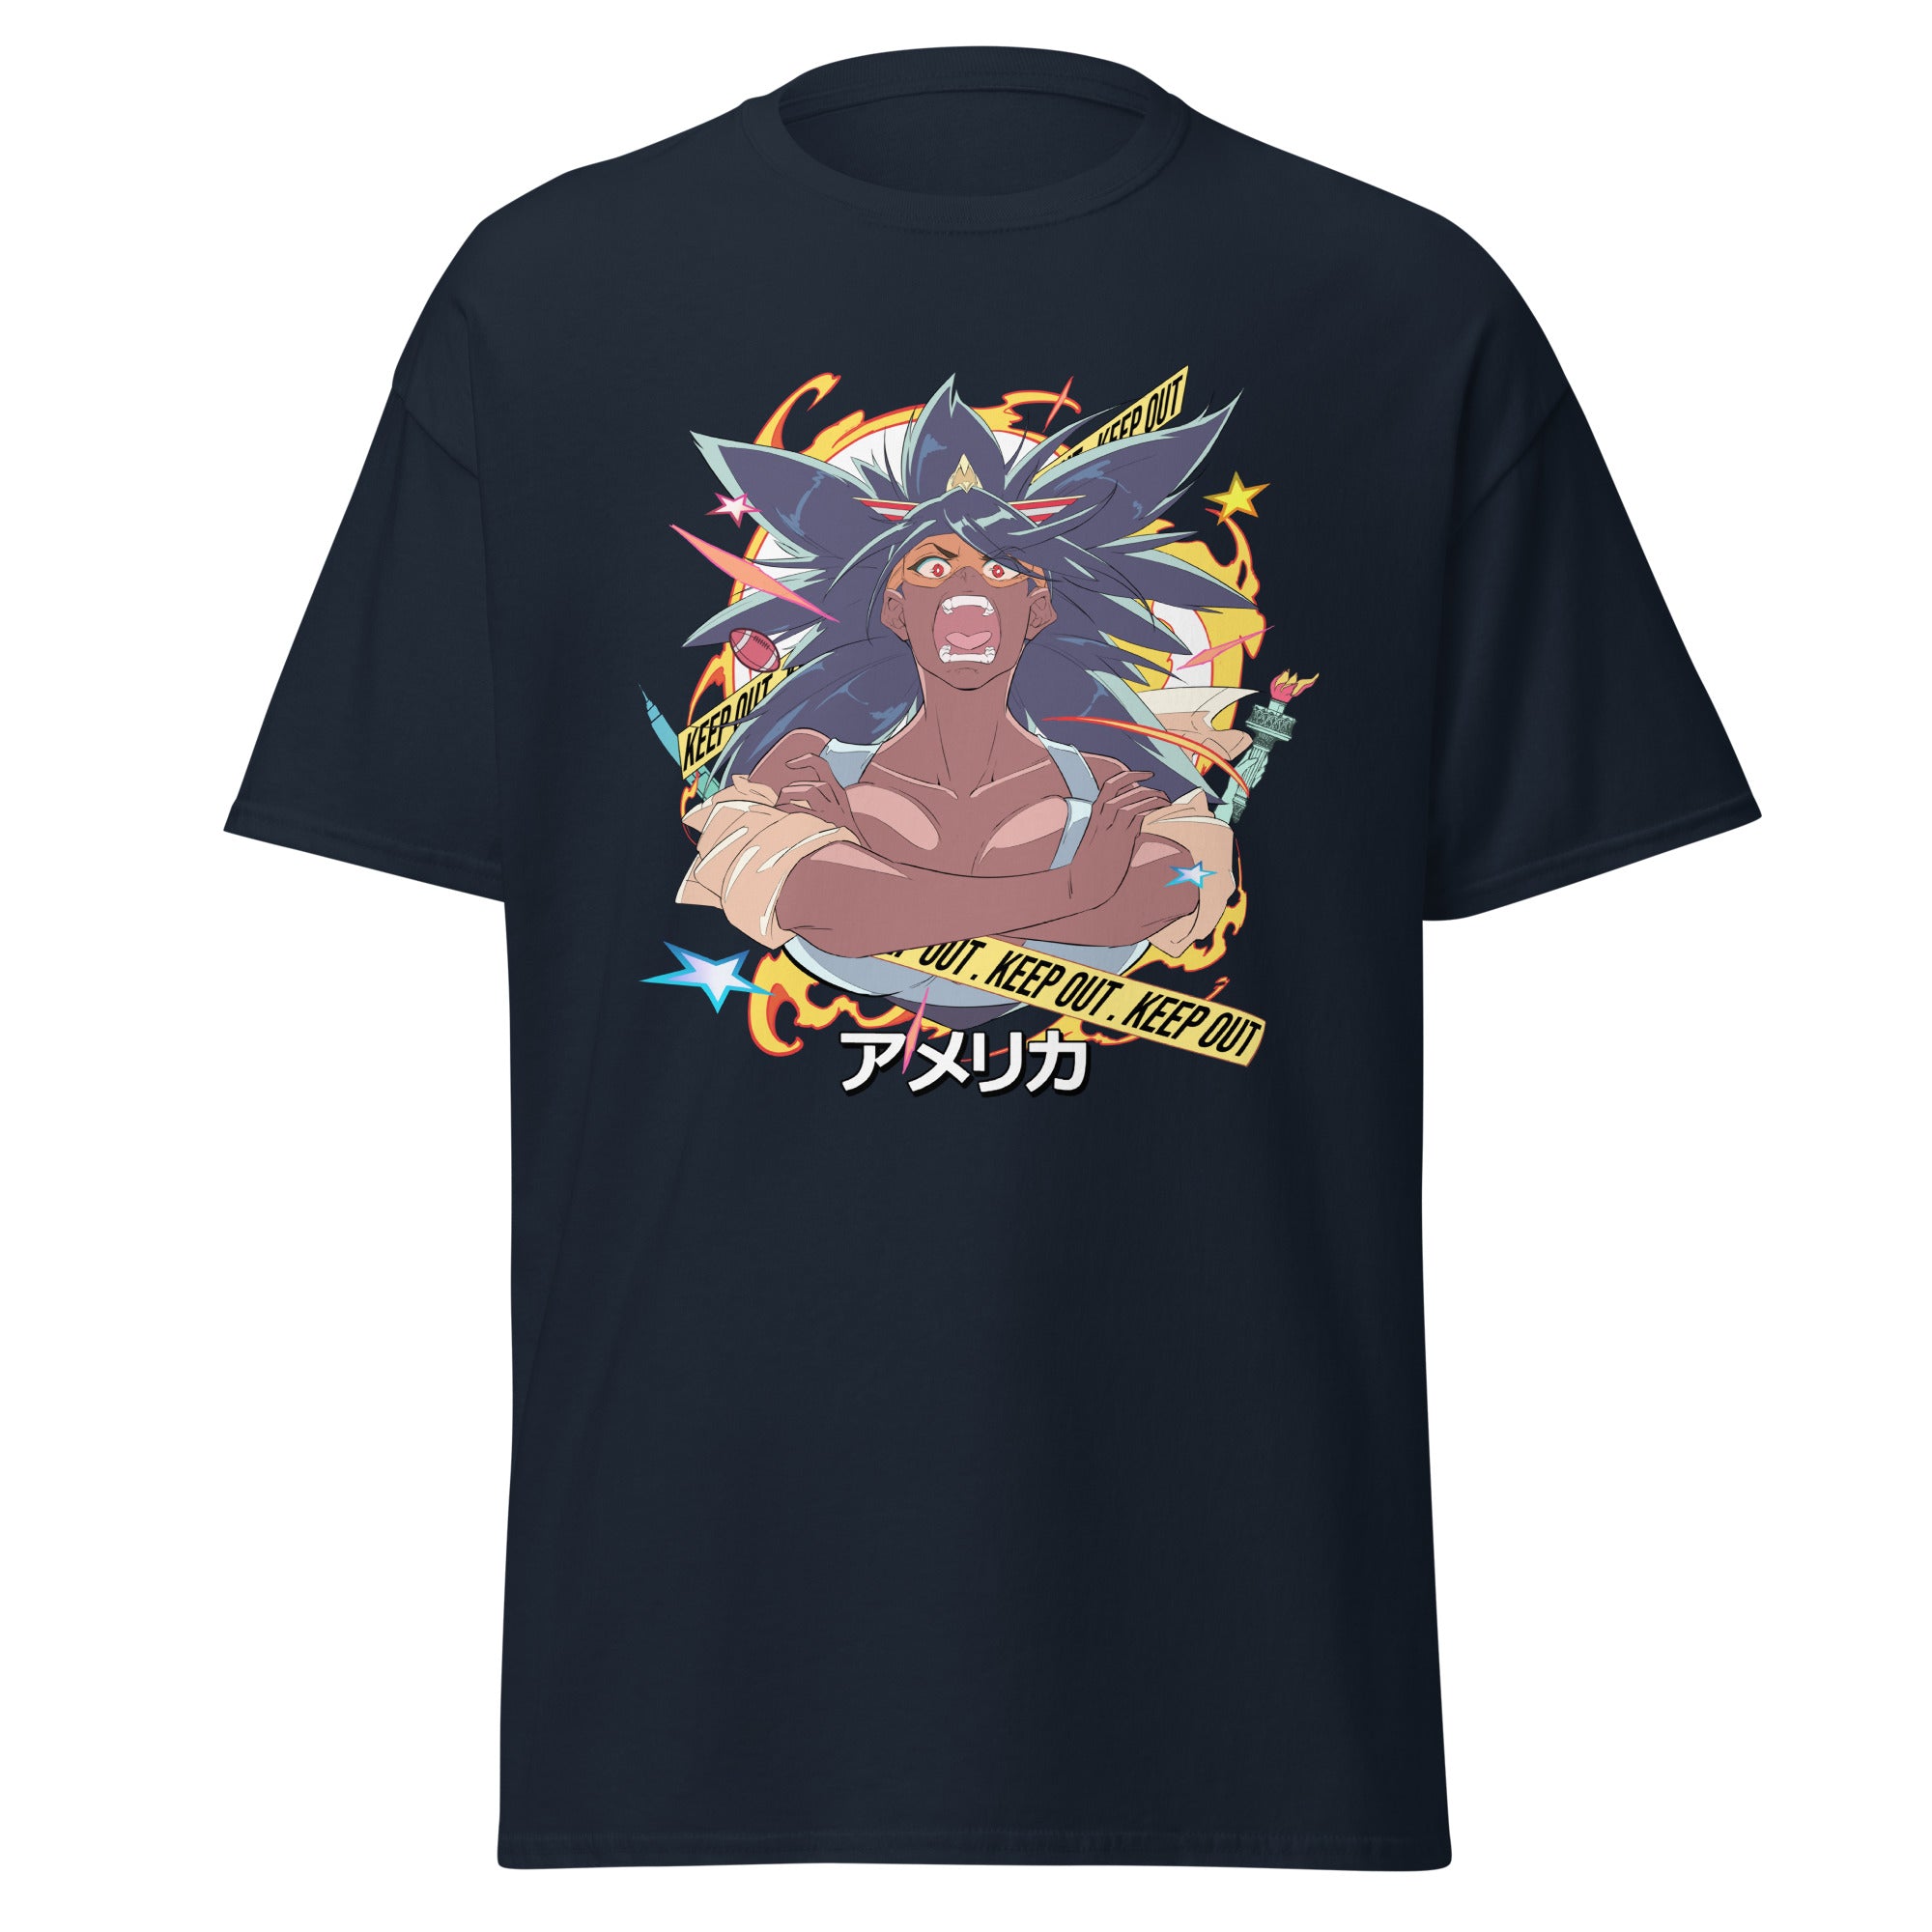 CW USA Unisex T-Shirt